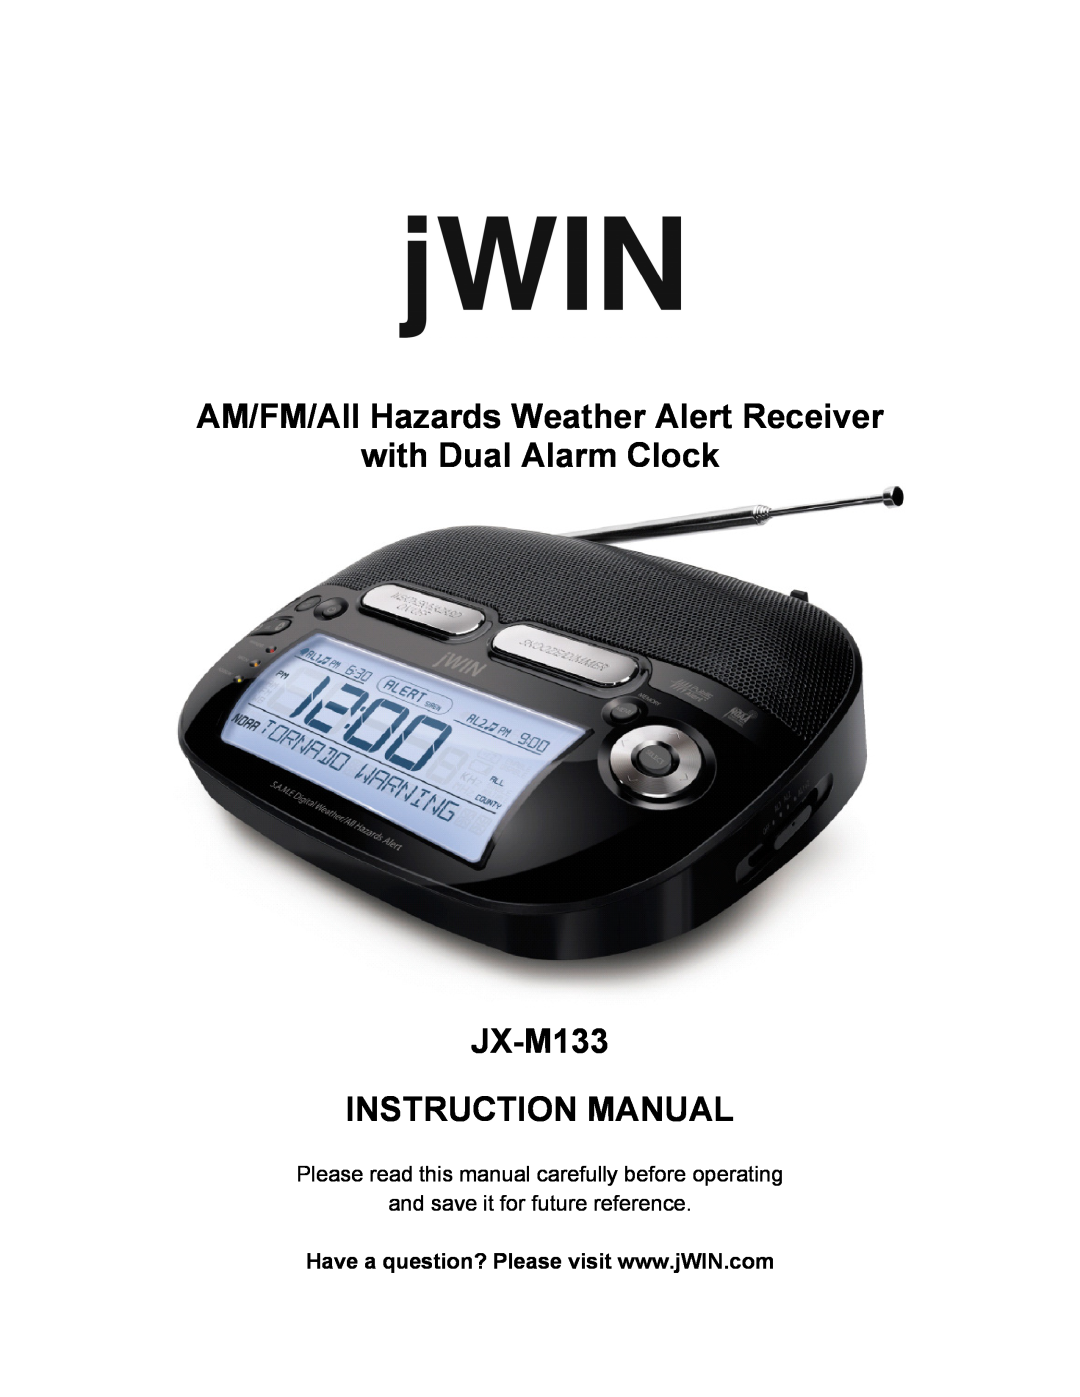 Jwin JX-M133 instruction manual AM/FM/All Hazards Weather Alert Receiver with Dual Alarm Clock 